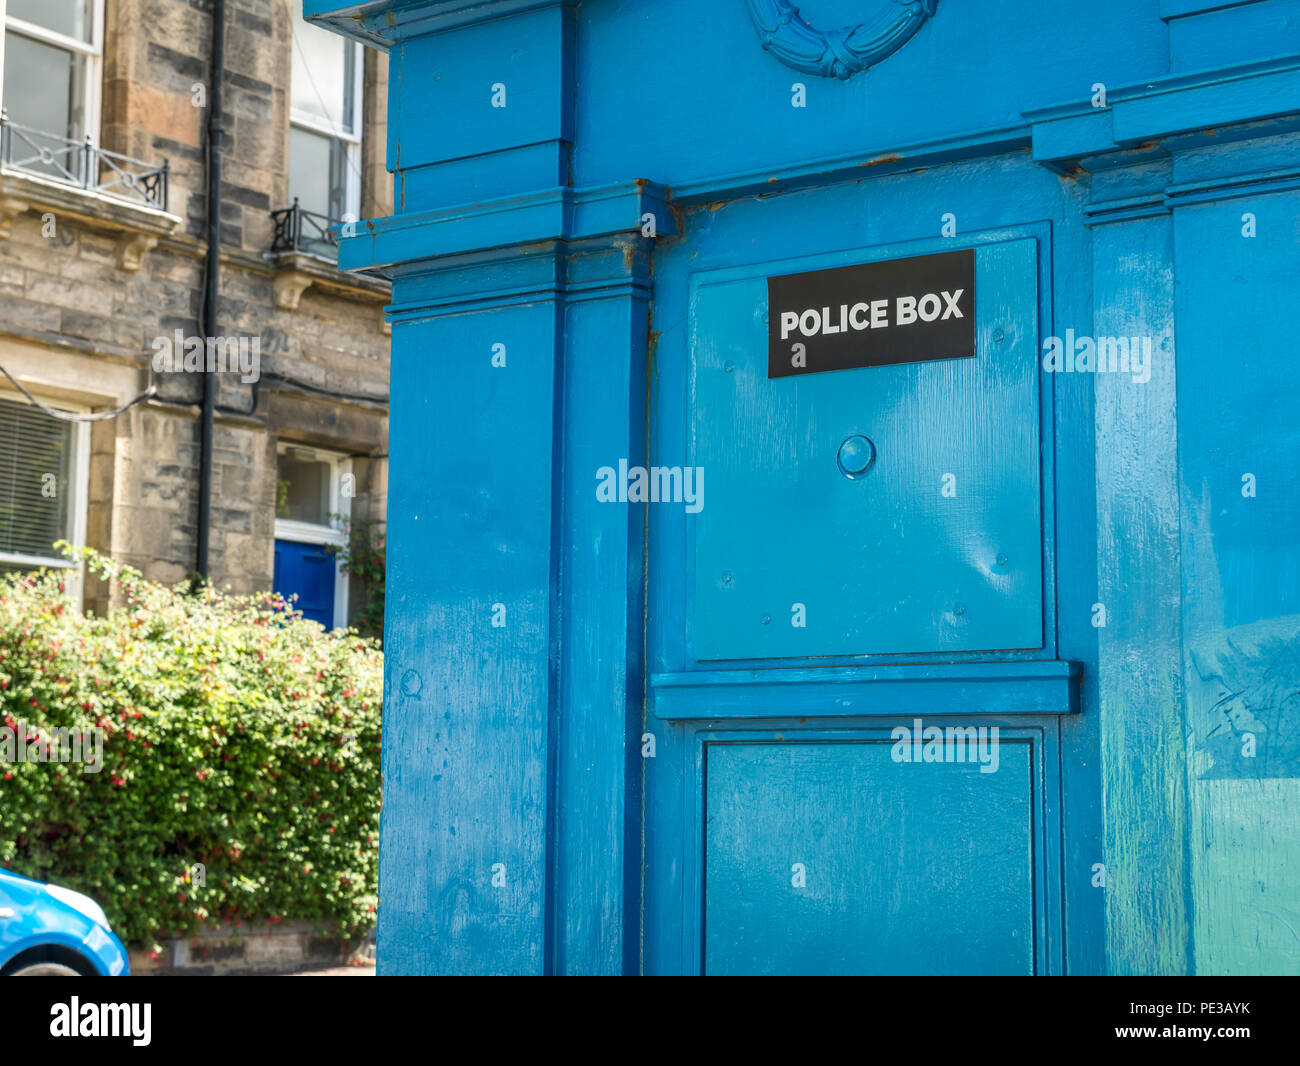 Disused blue police call box like a Tardis with Police Box name, Edinburgh, Scotland, UK Stock Photo